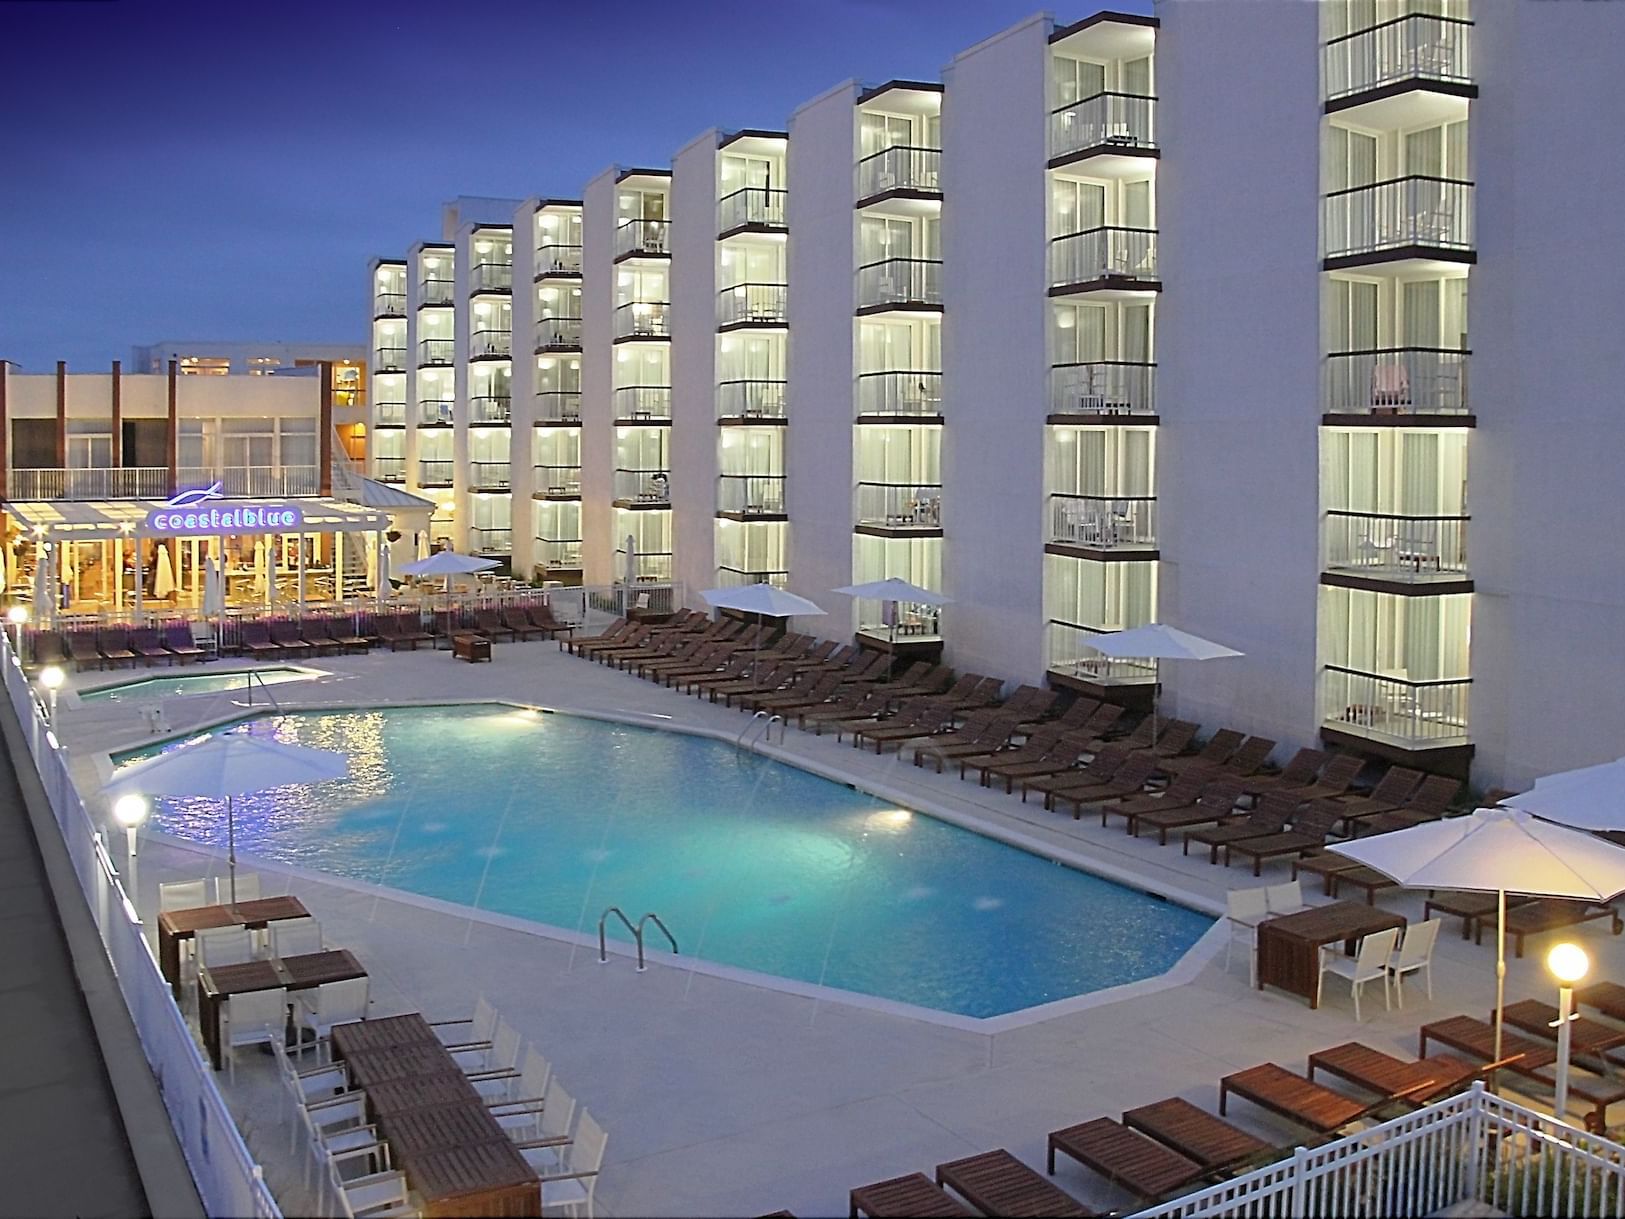 Pool area of our Diamond Beach NJ hotel at night